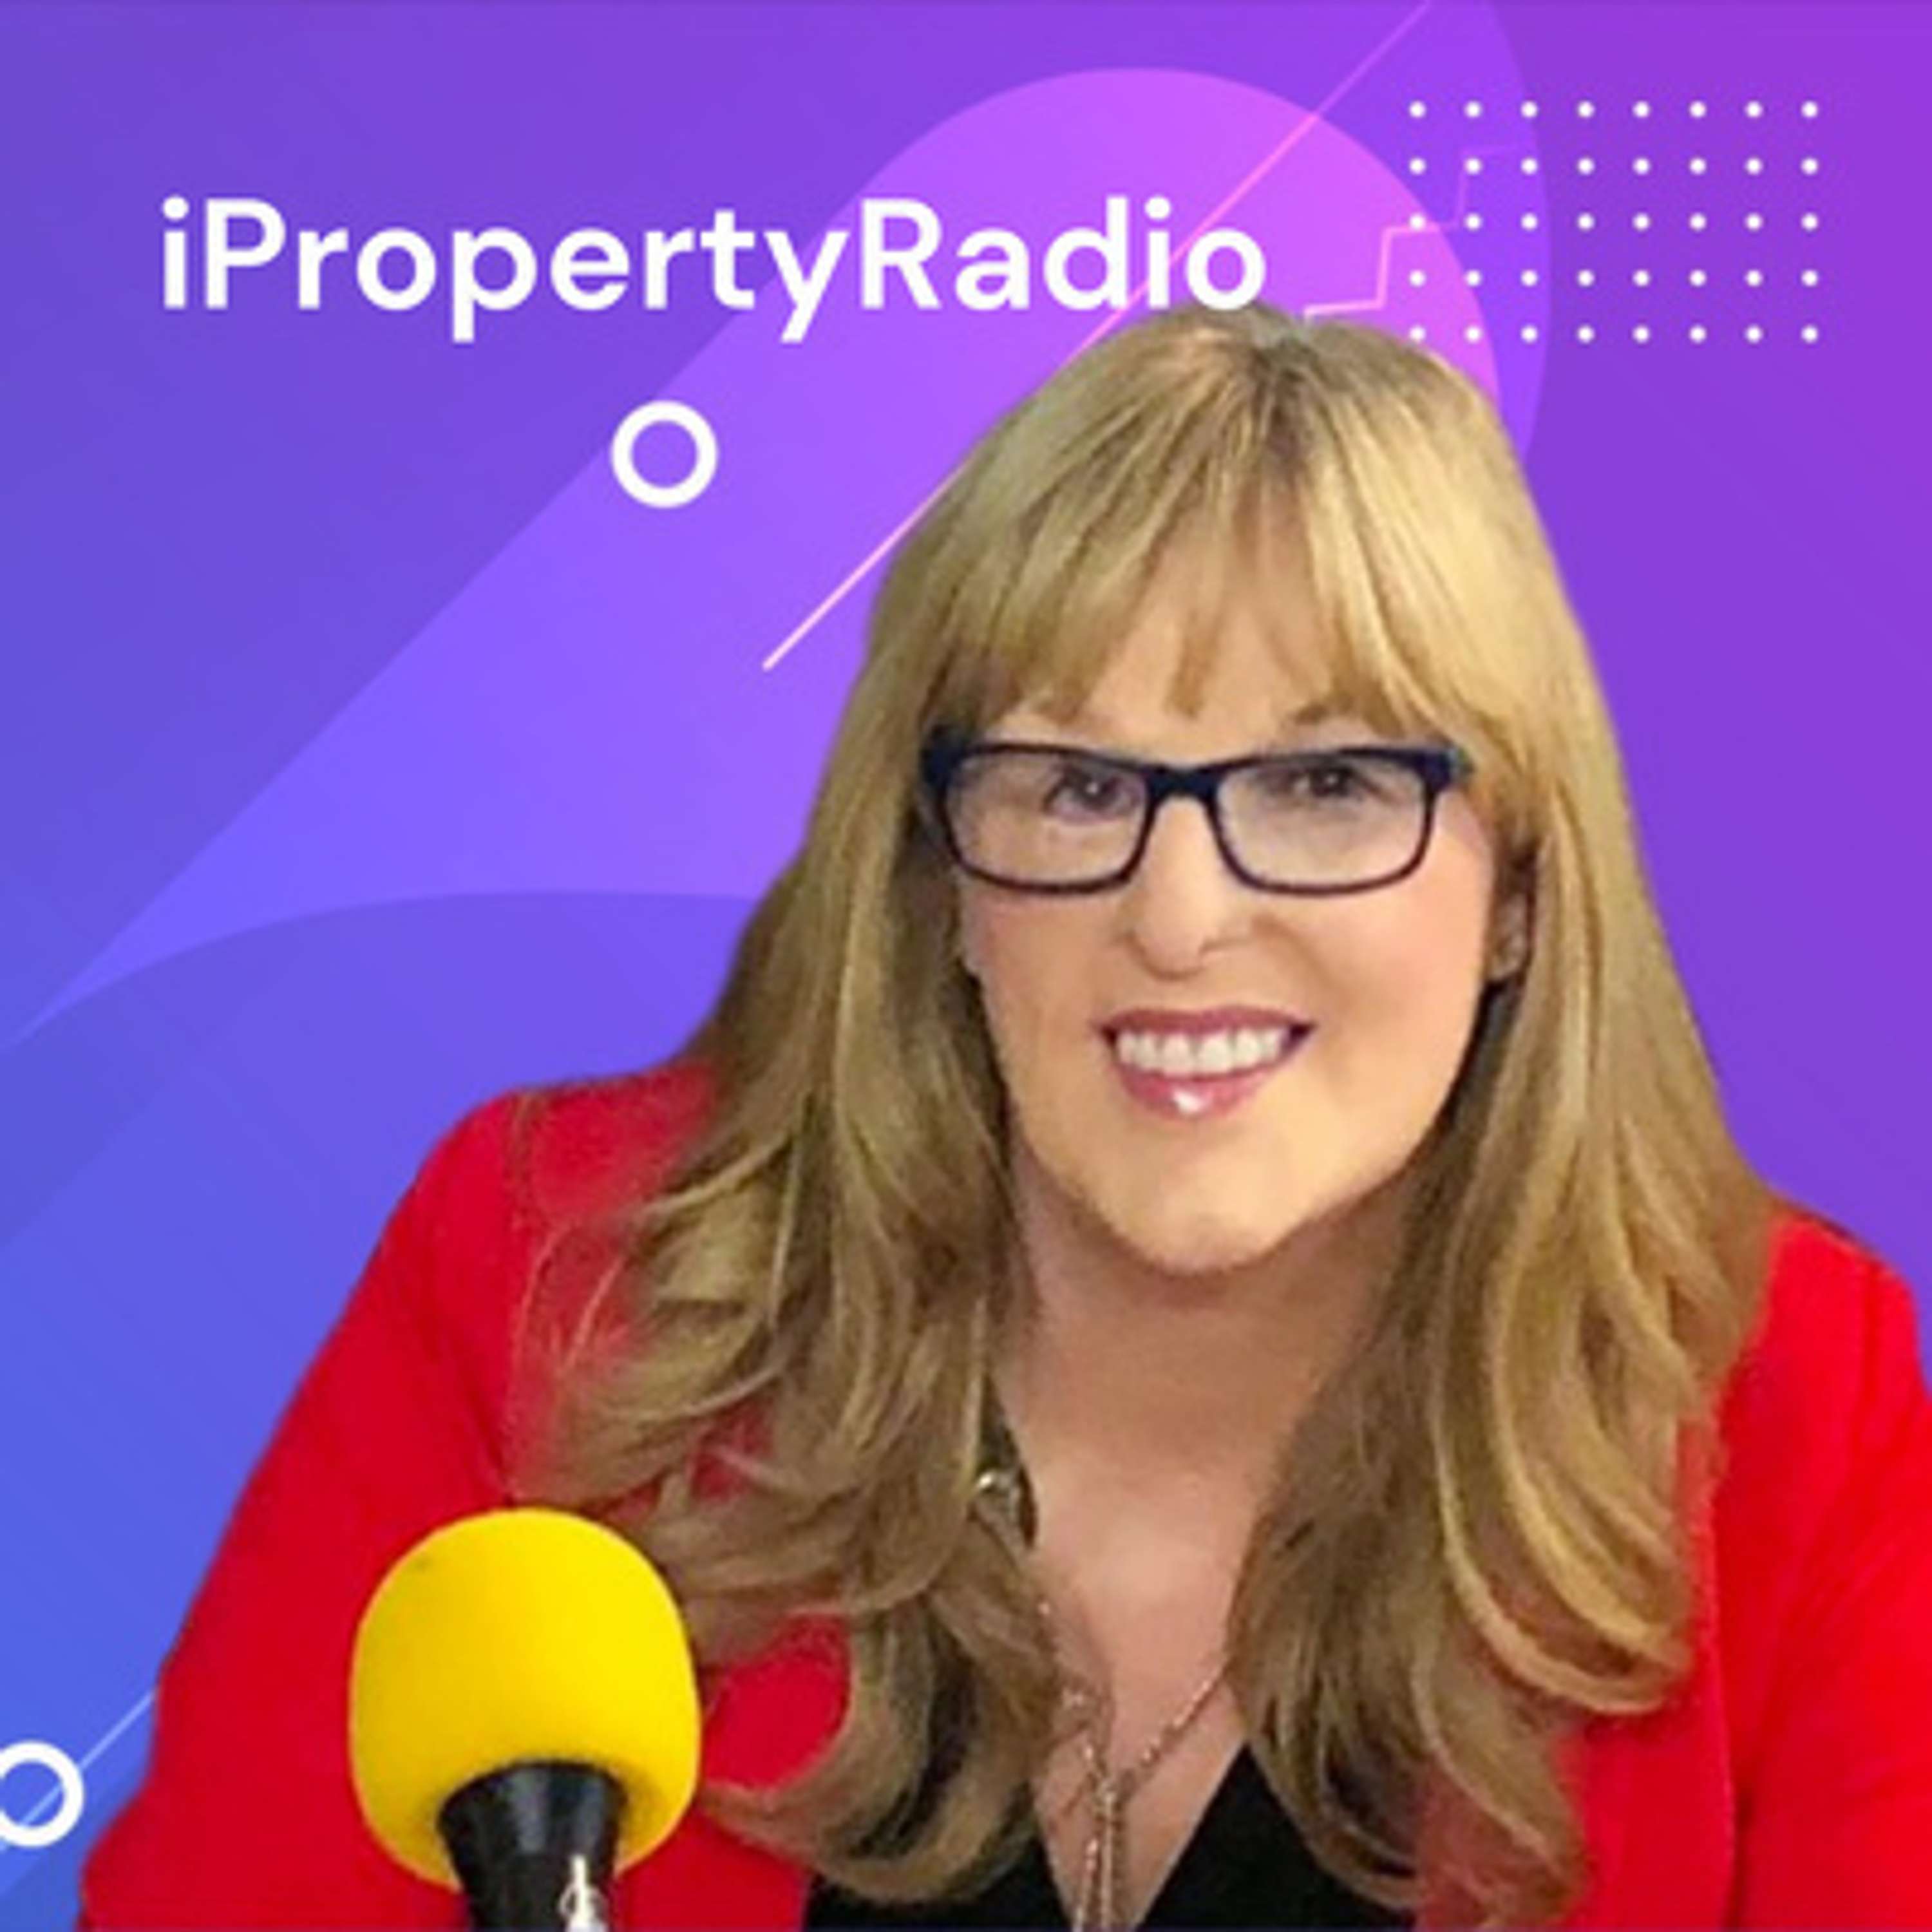 Ep.26 iPropertyRadio: Property Matters, July 23rd, 2019